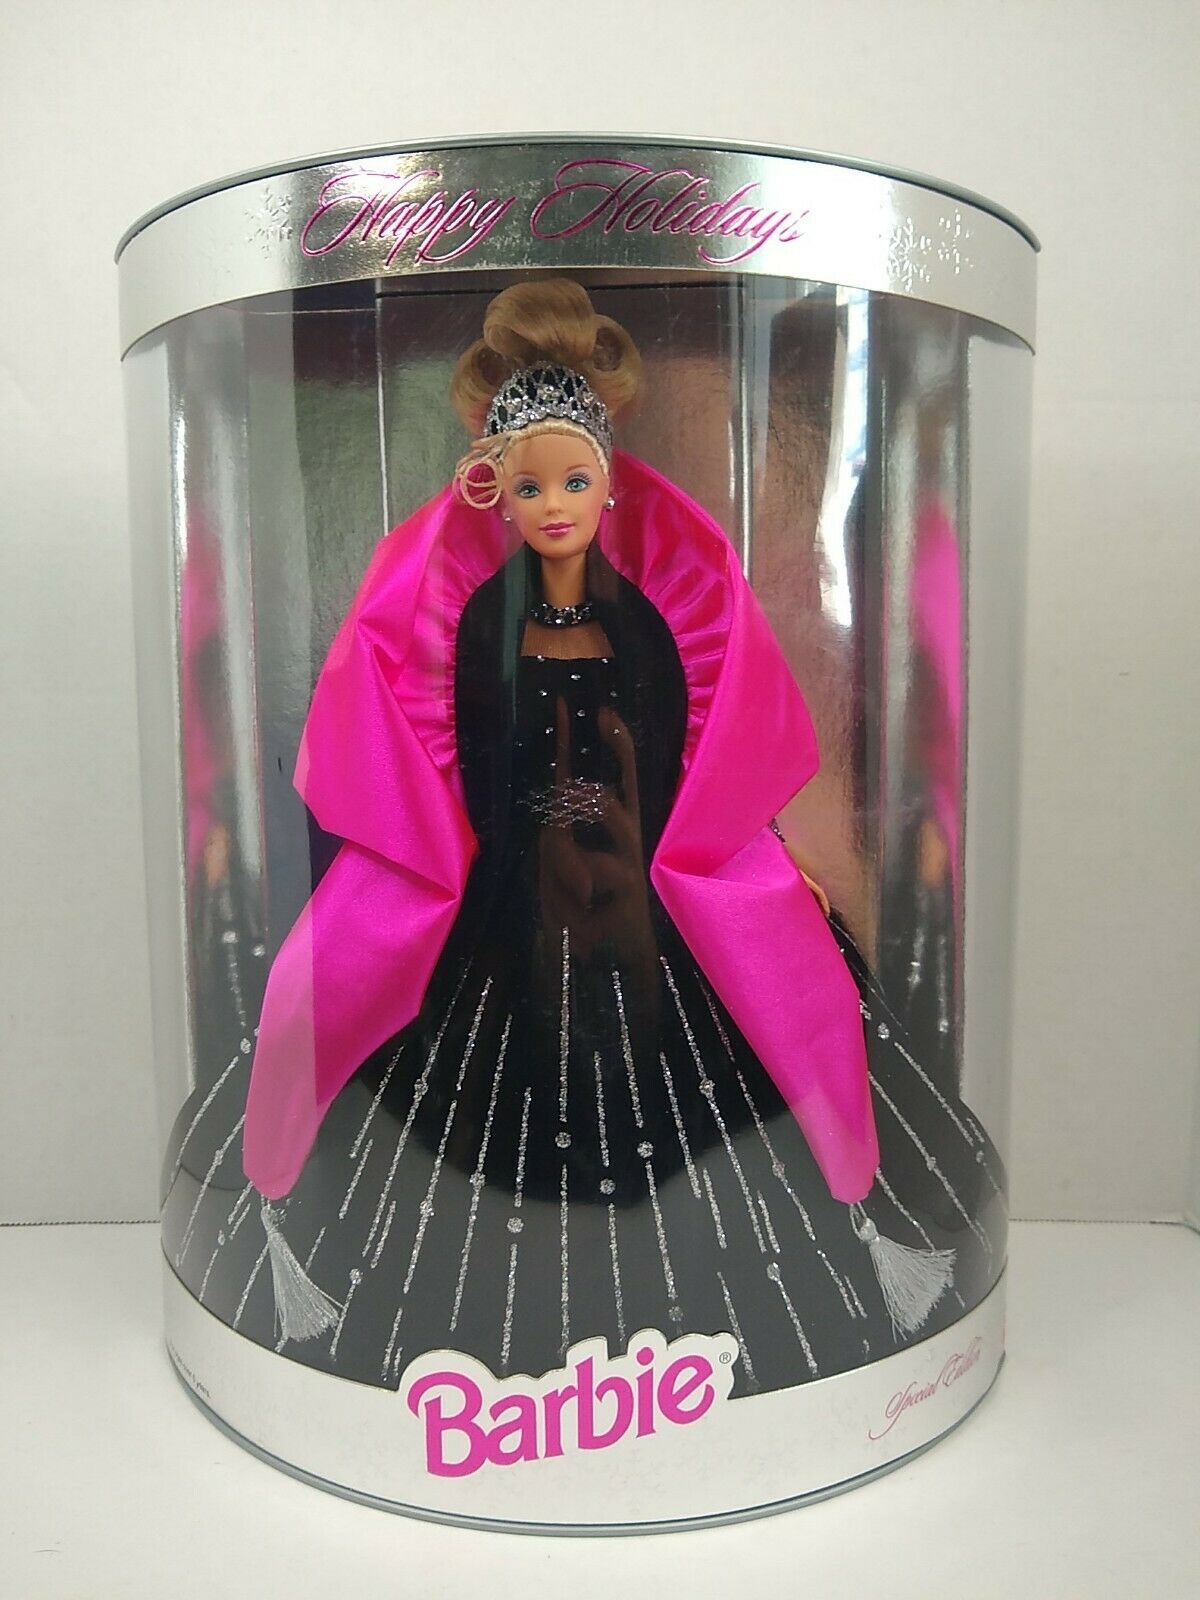 Happy Holidays Barbie Doll, Special Edition, blonde, Nrfb, 1998, Mattel #20200